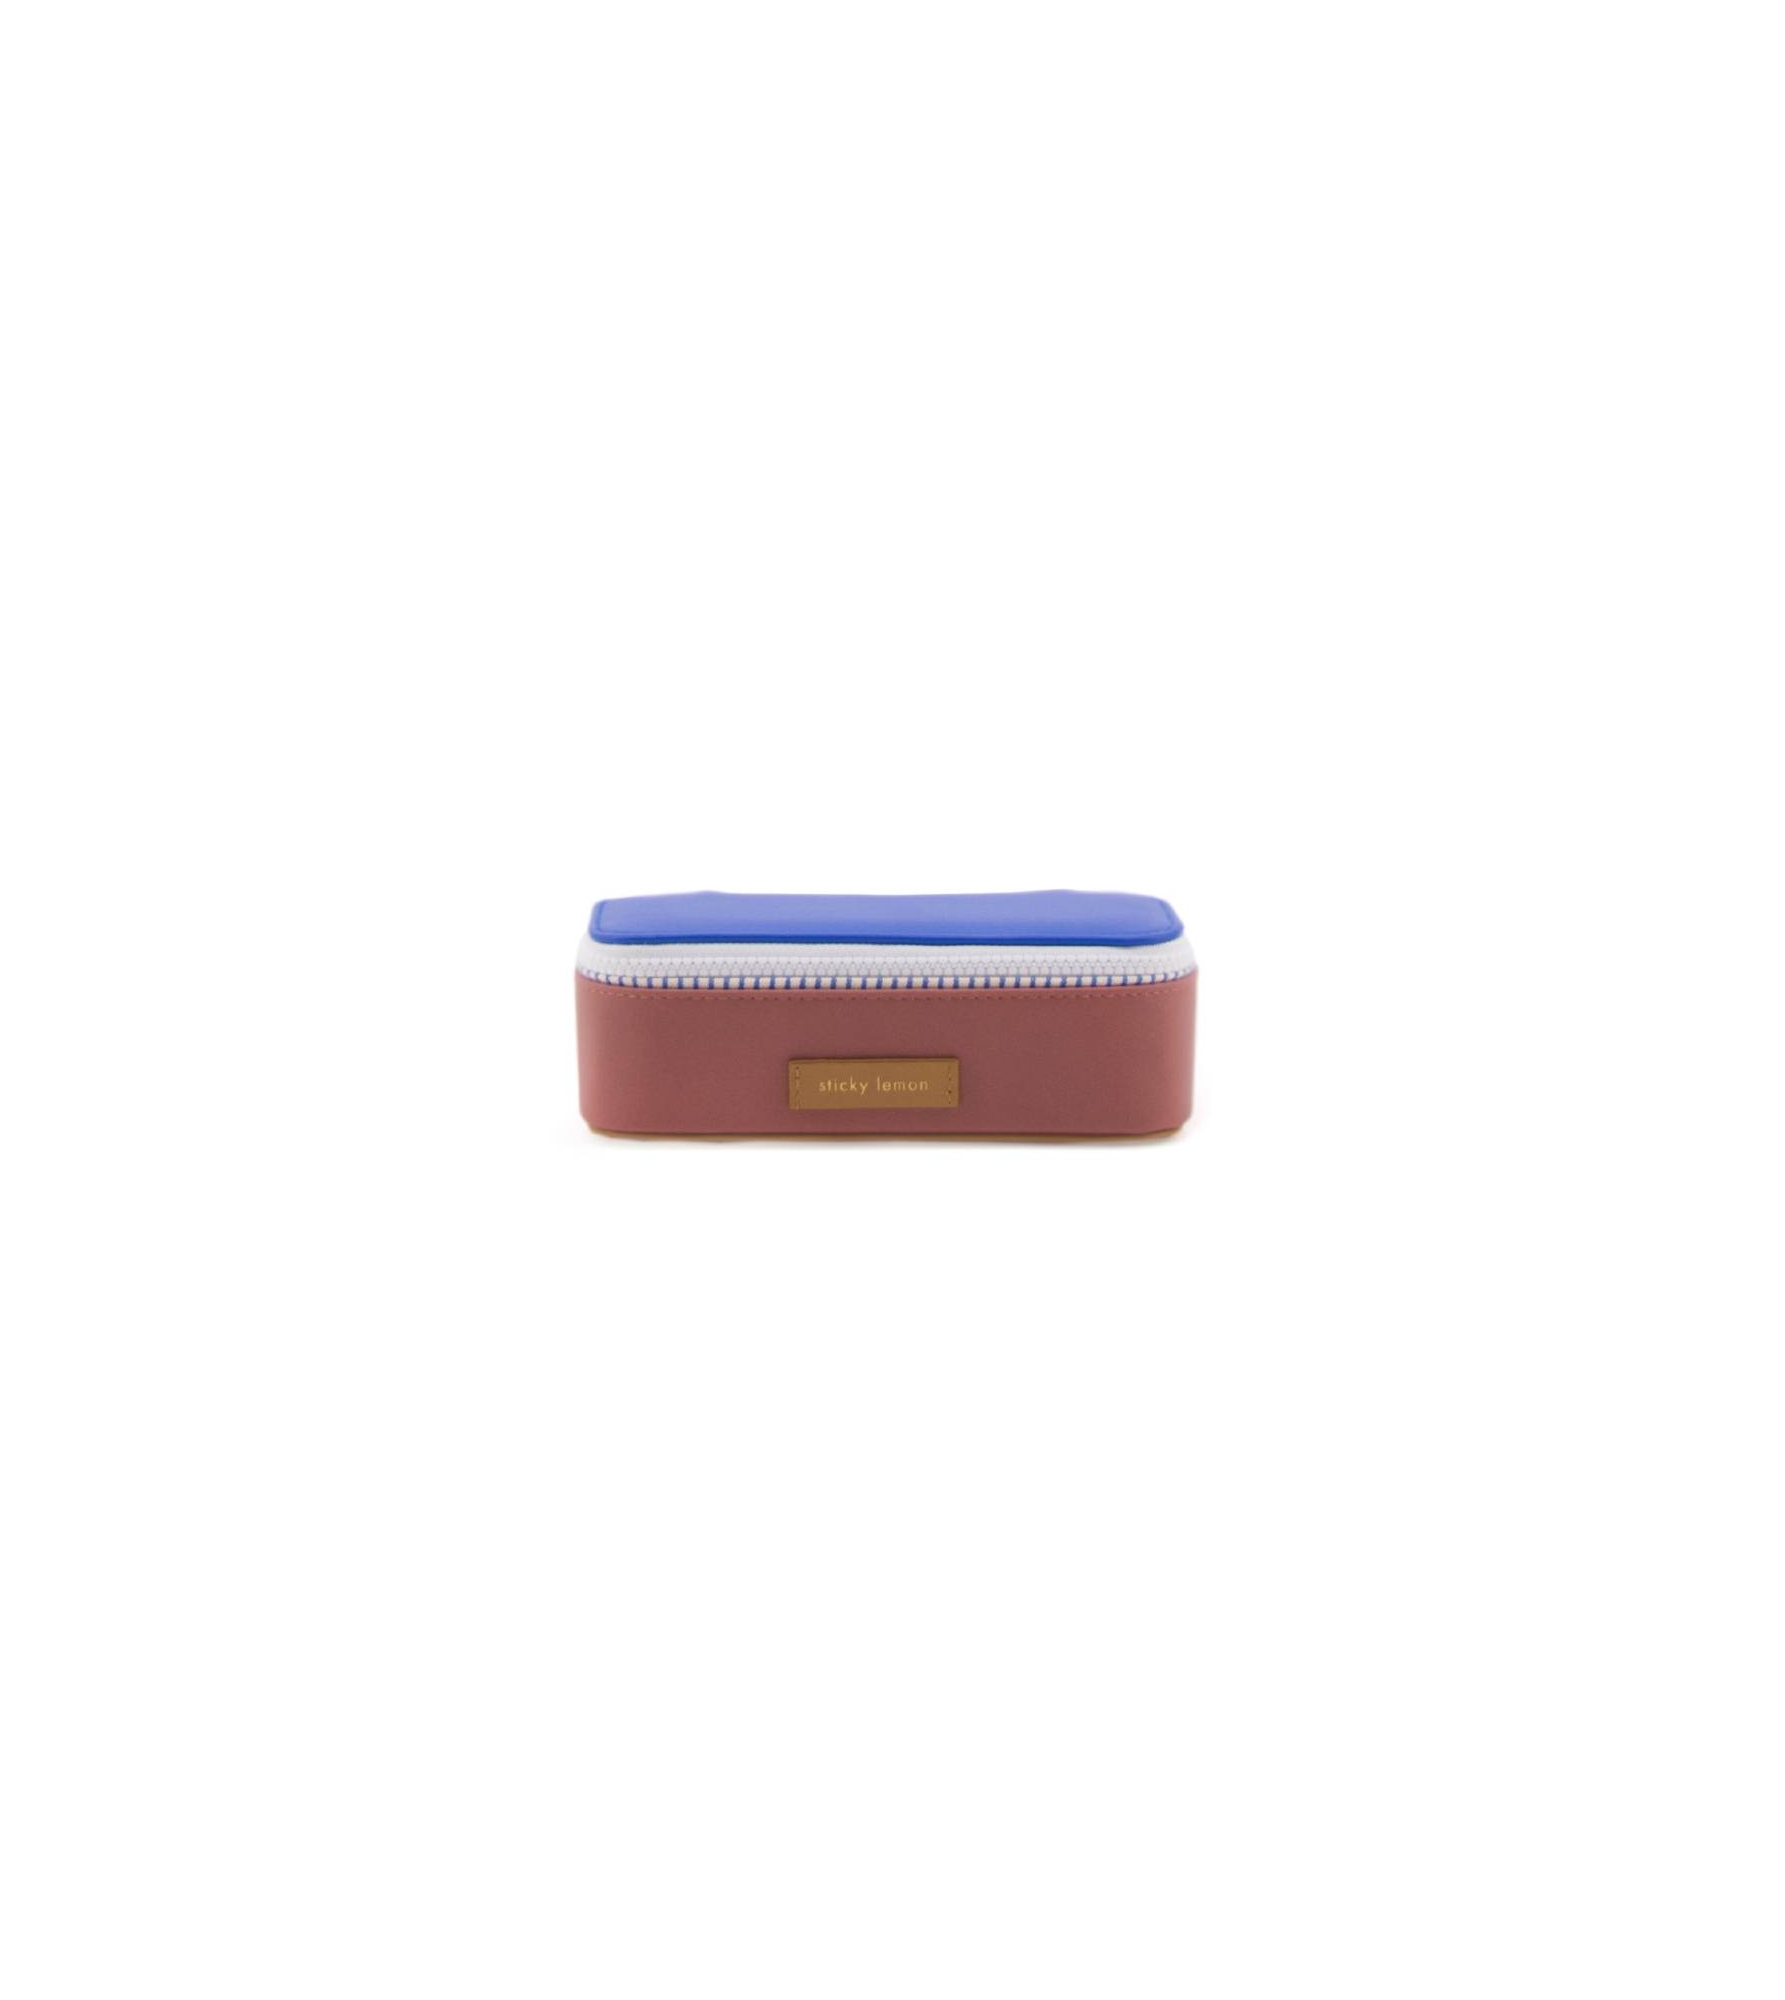 1801420 - Sticky Lemon - pencilbox - Ink blue, hotel brick, sugar brown - front.jpg